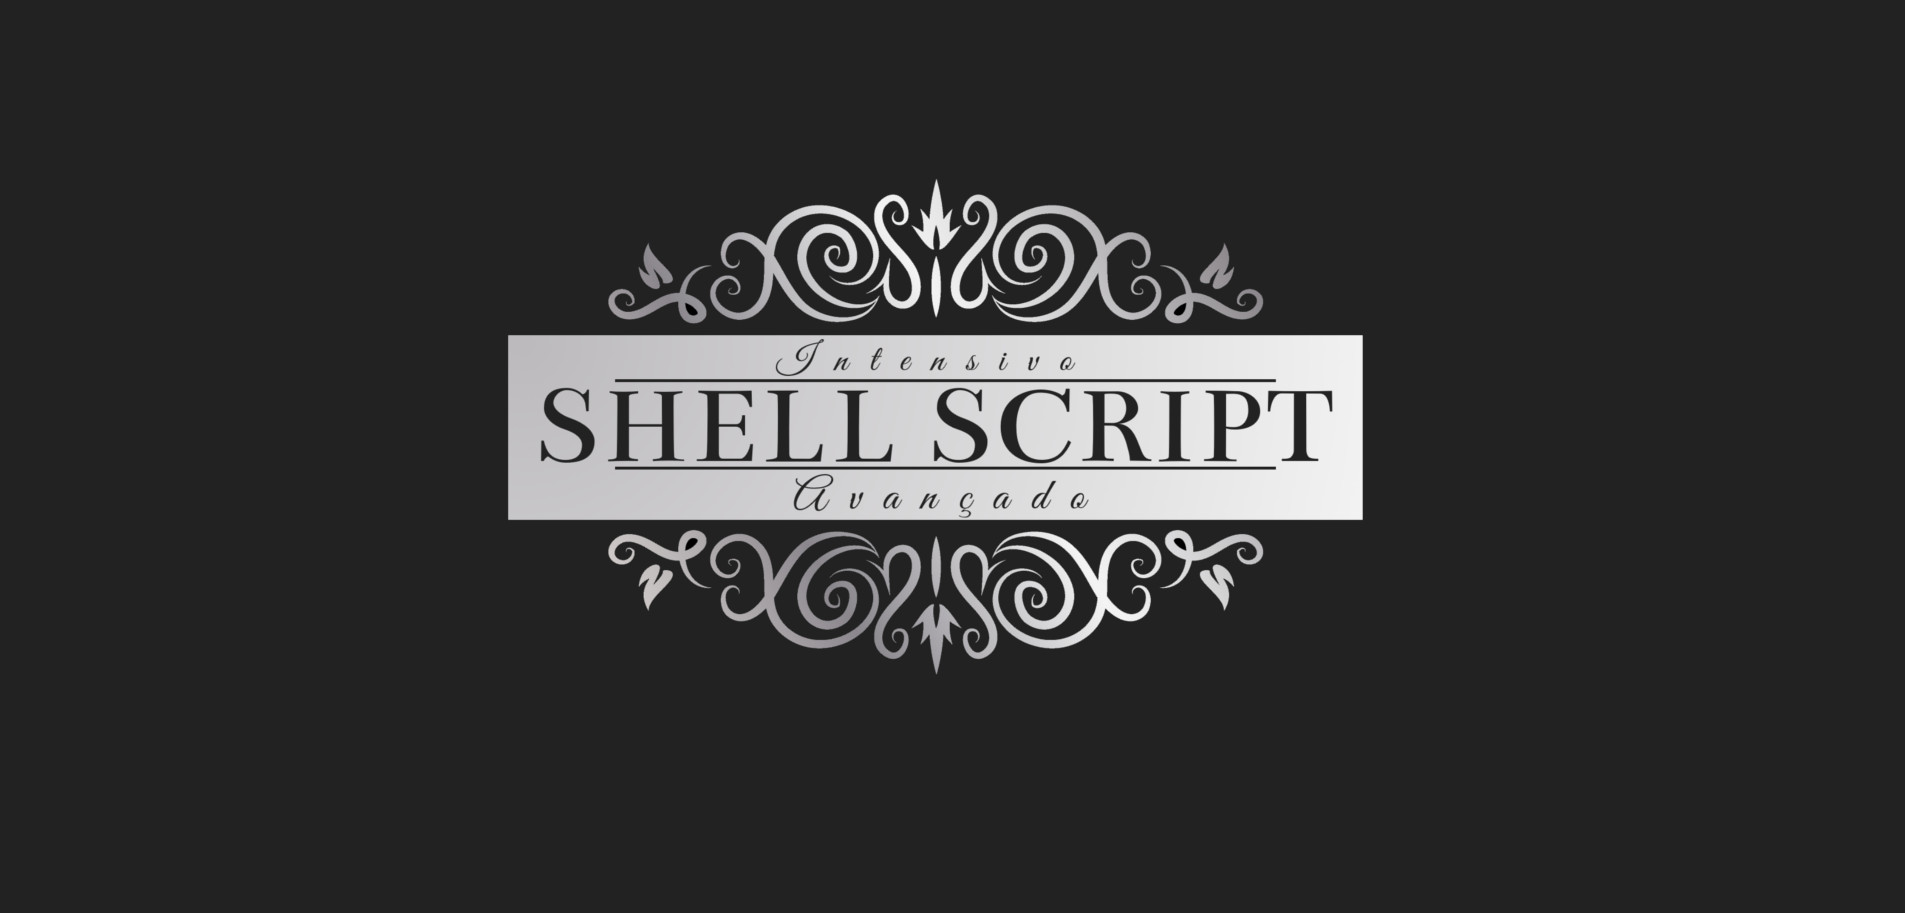 Curso Intensivo de Shell Script Avançado